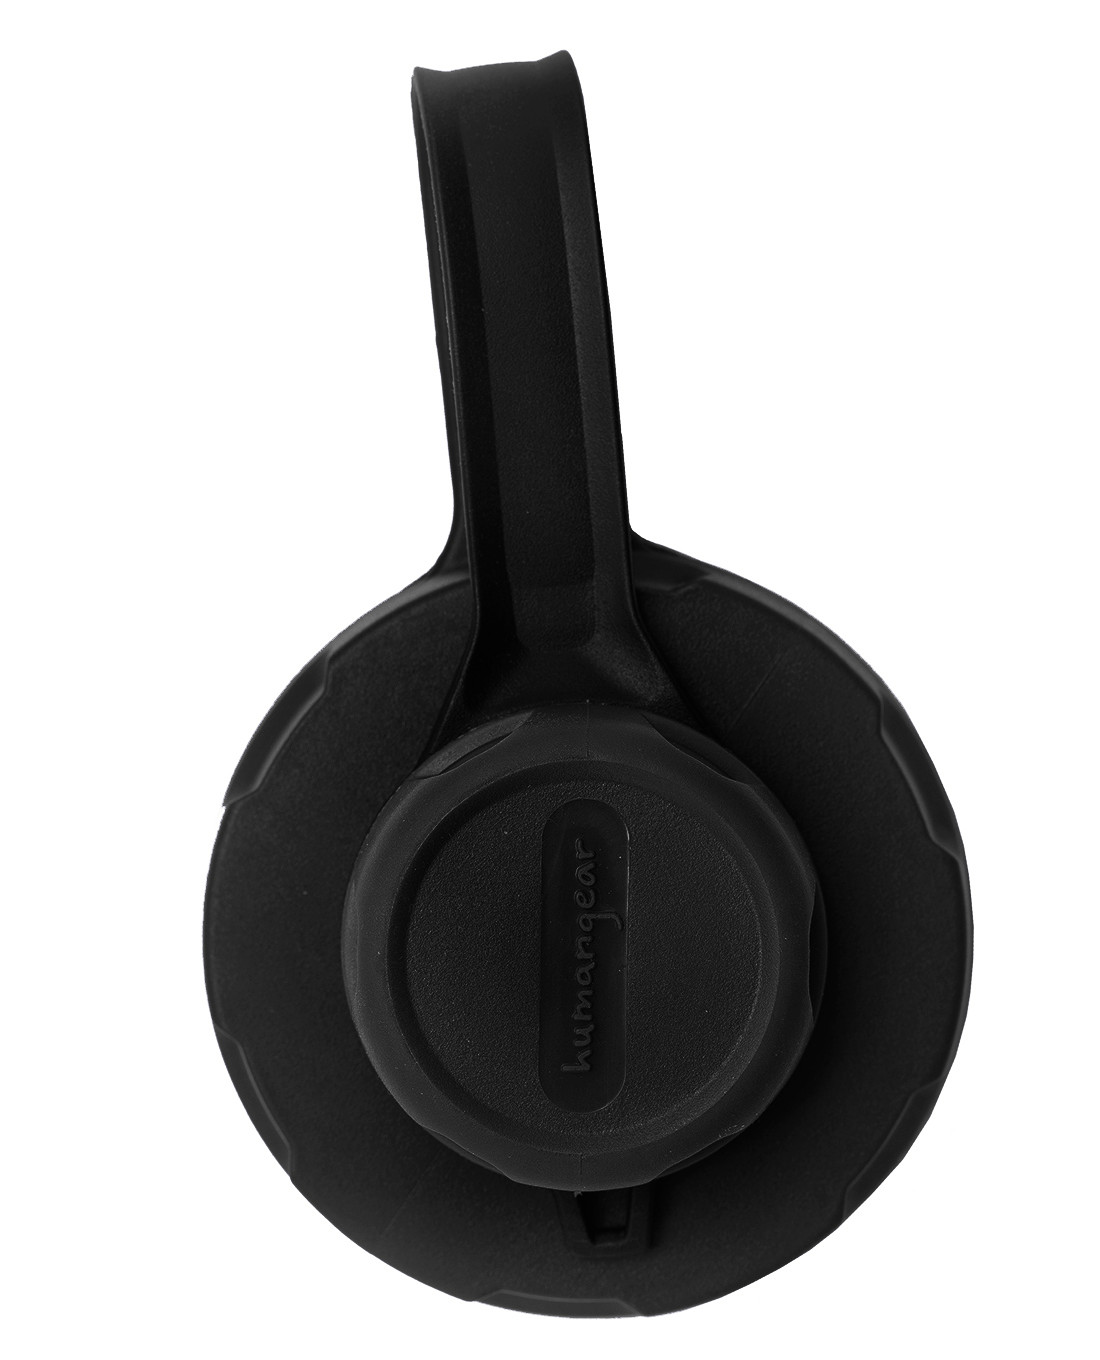 Black//Grey Humangear capCap